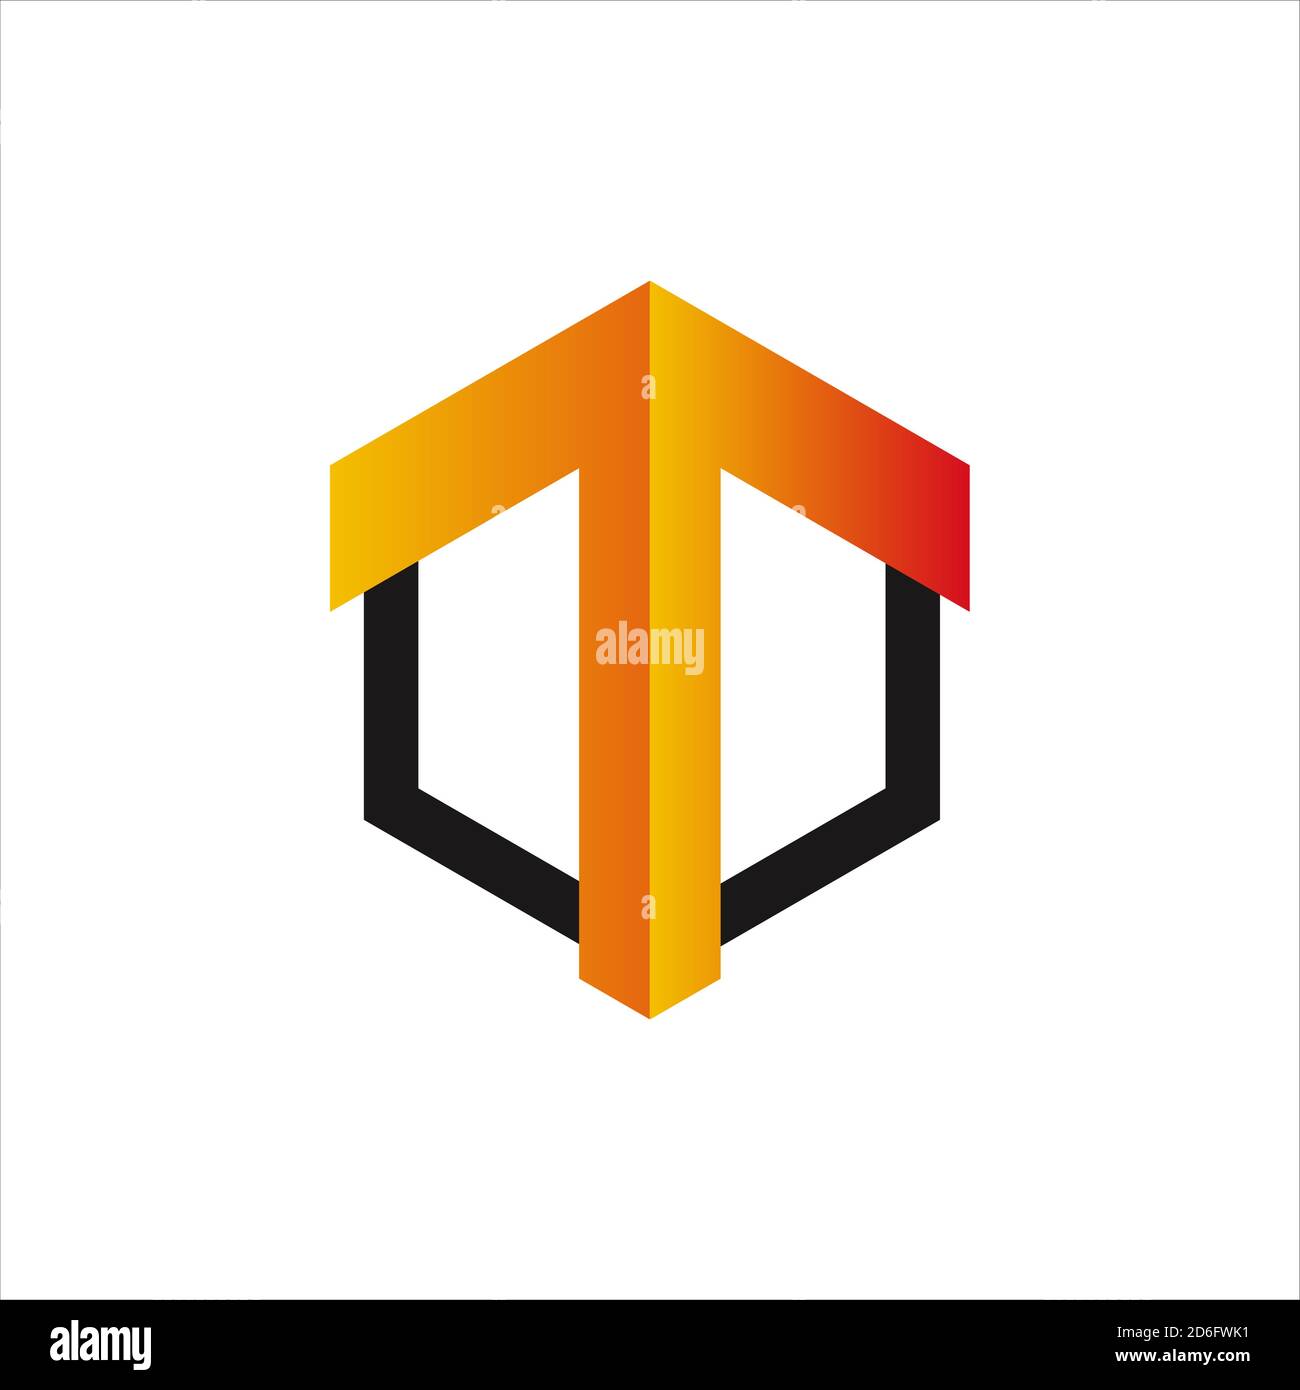 abstract colorful geometric hexagonal logo design icon vector illustration Stock Vector